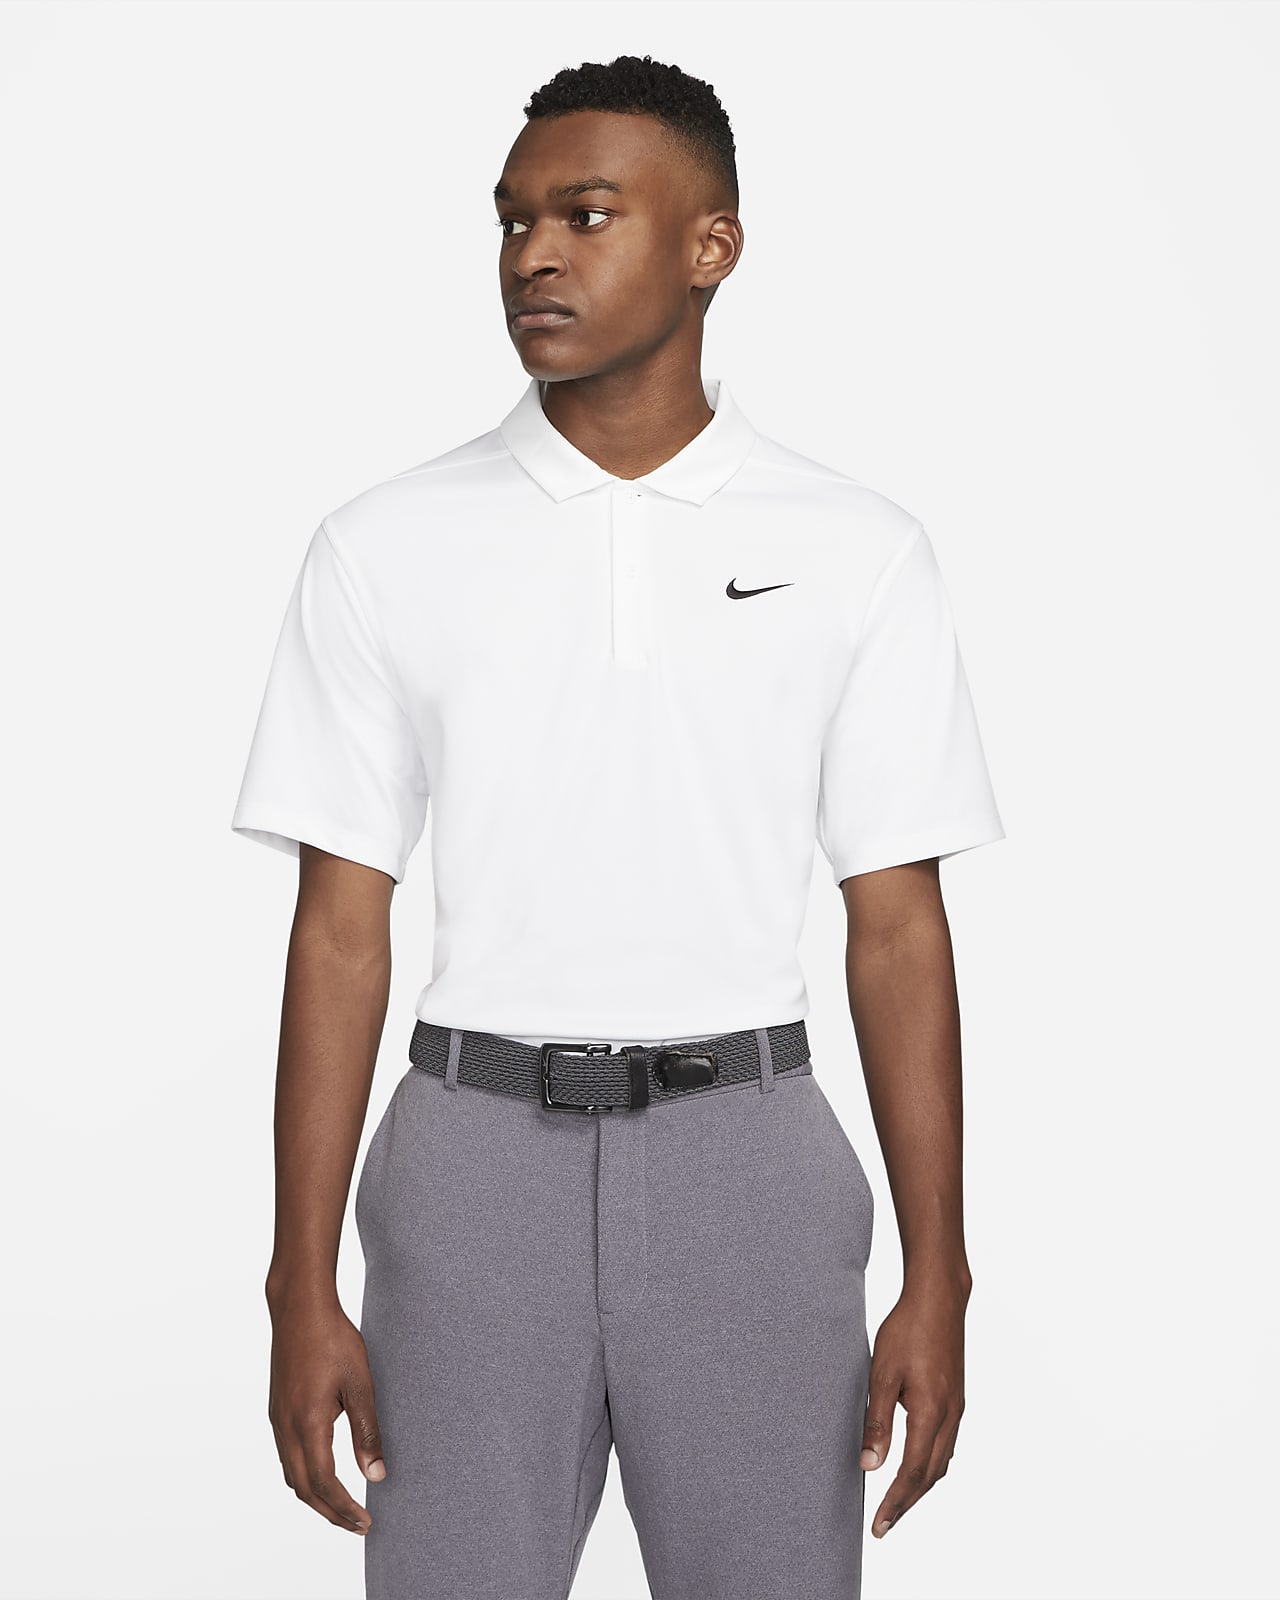 Nike Dri-FIT Men's Golf Polo. Nike LU